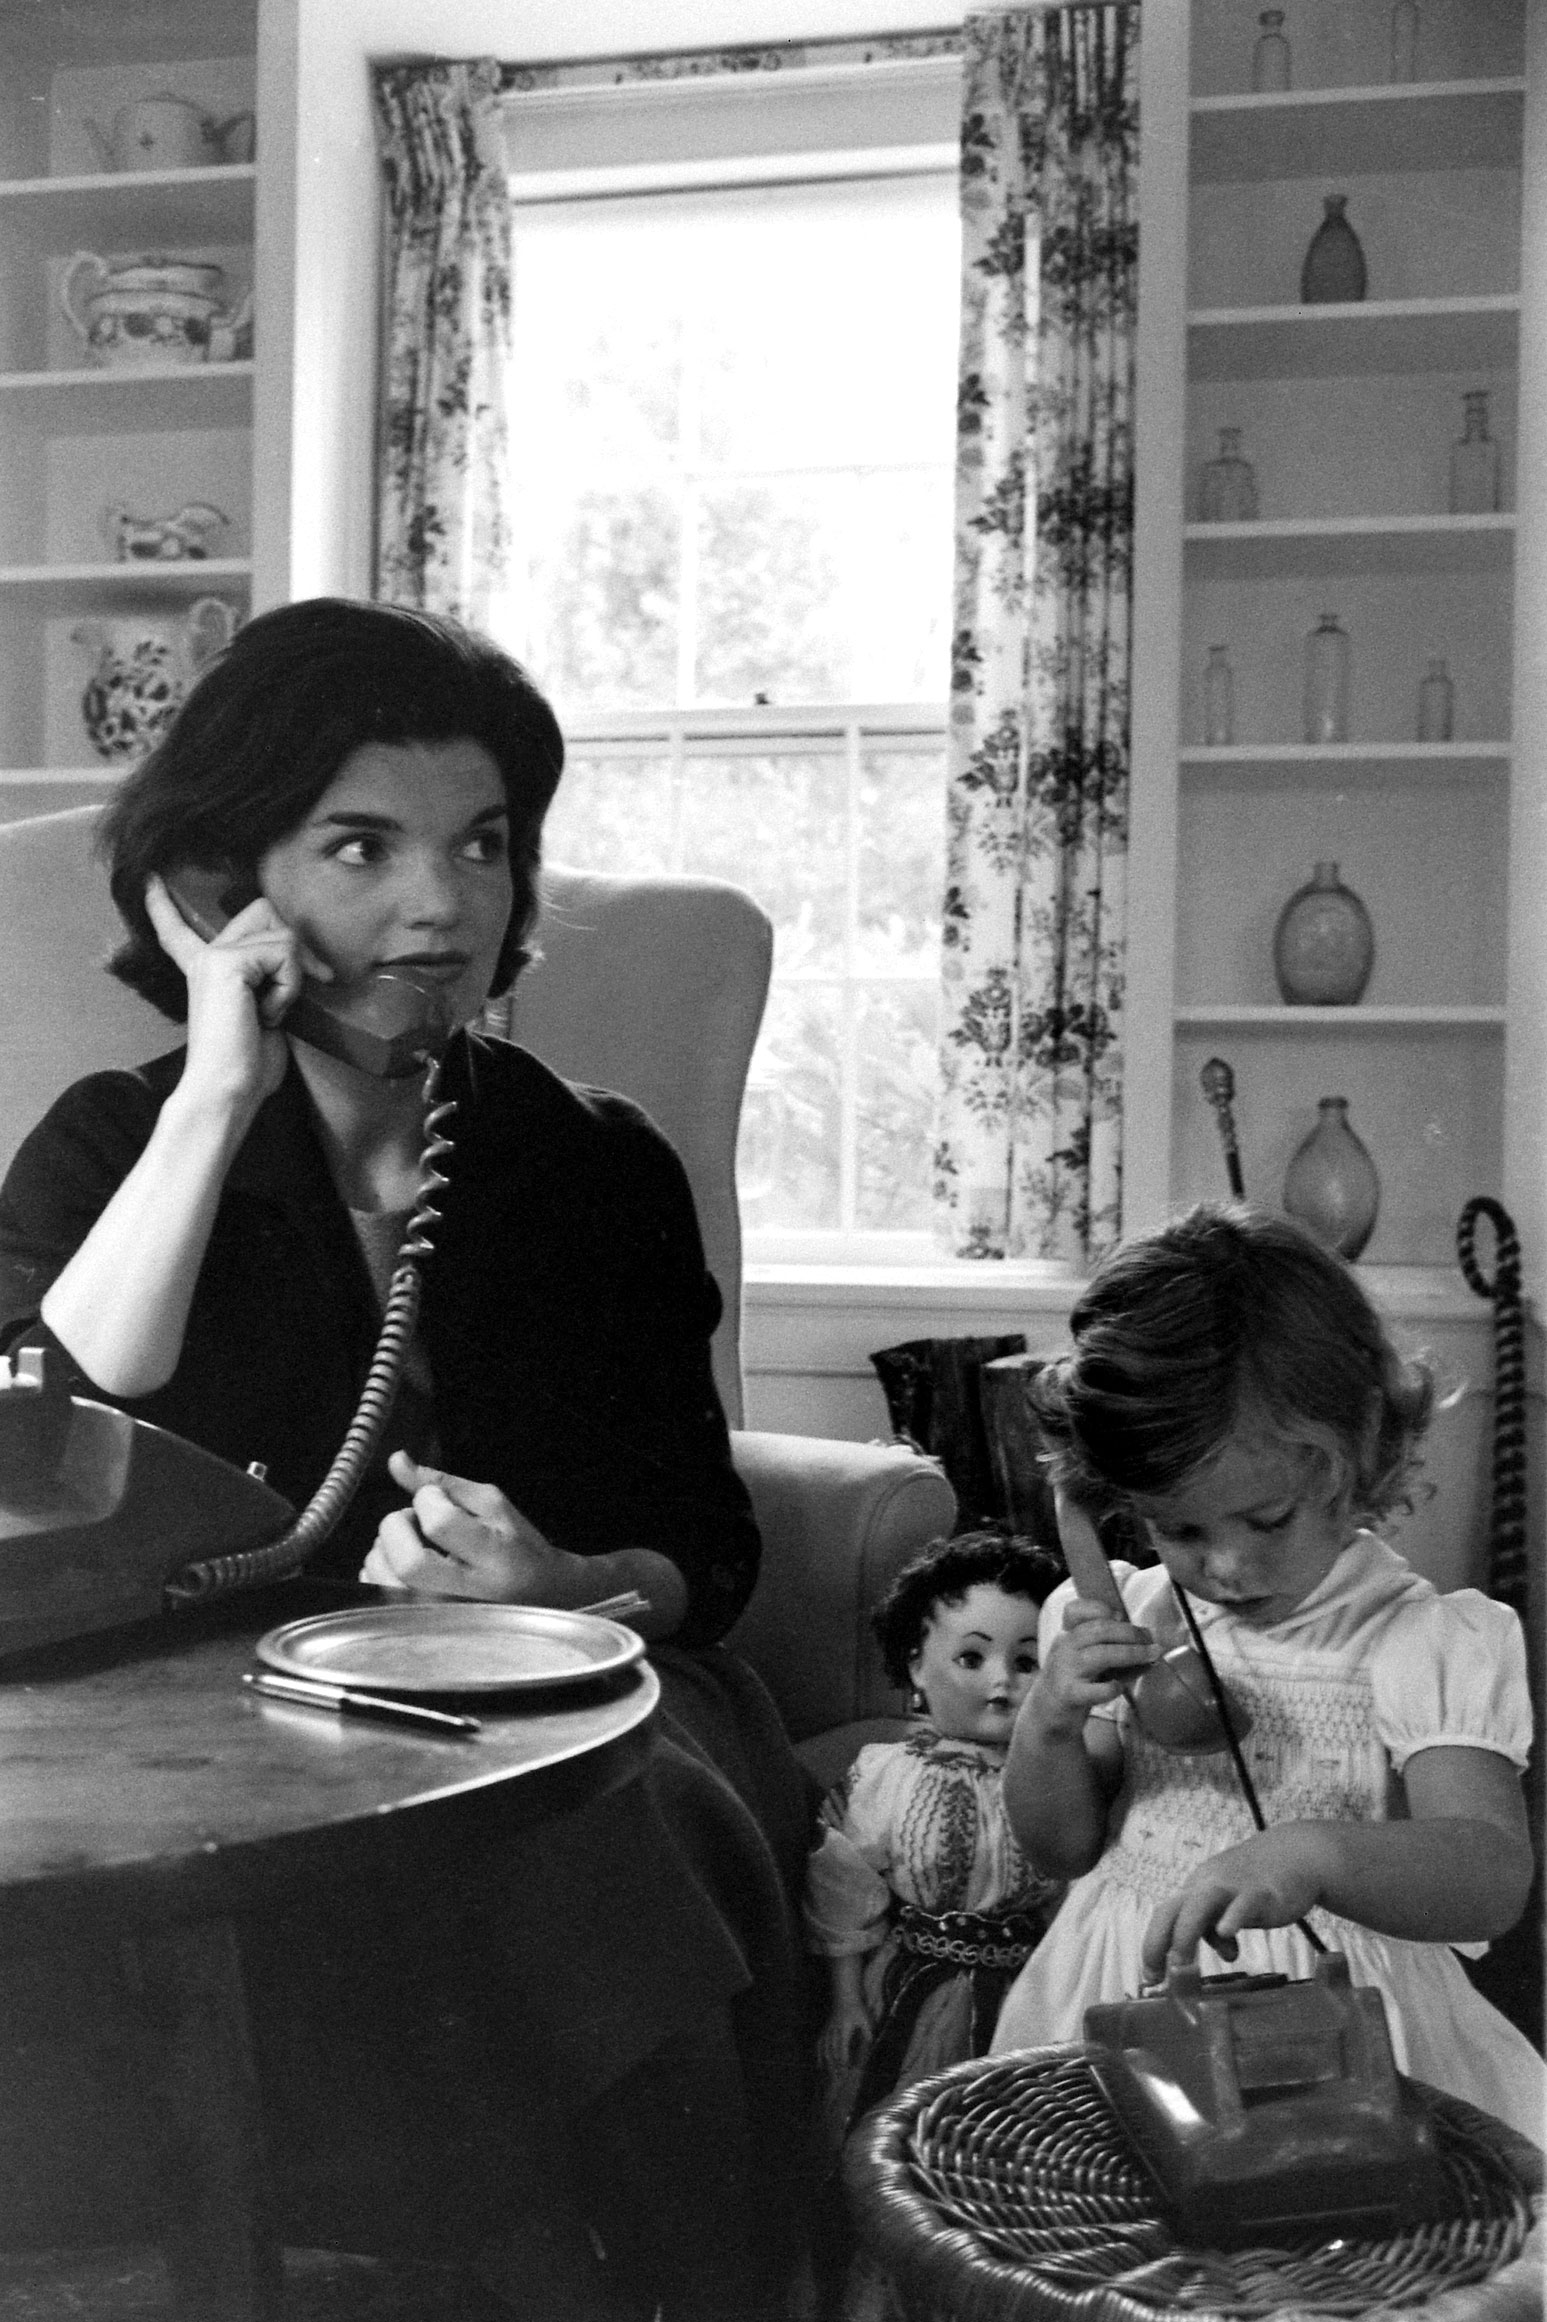 Jackie Kennedy and Caroline Kennedy on the phone, 1960.